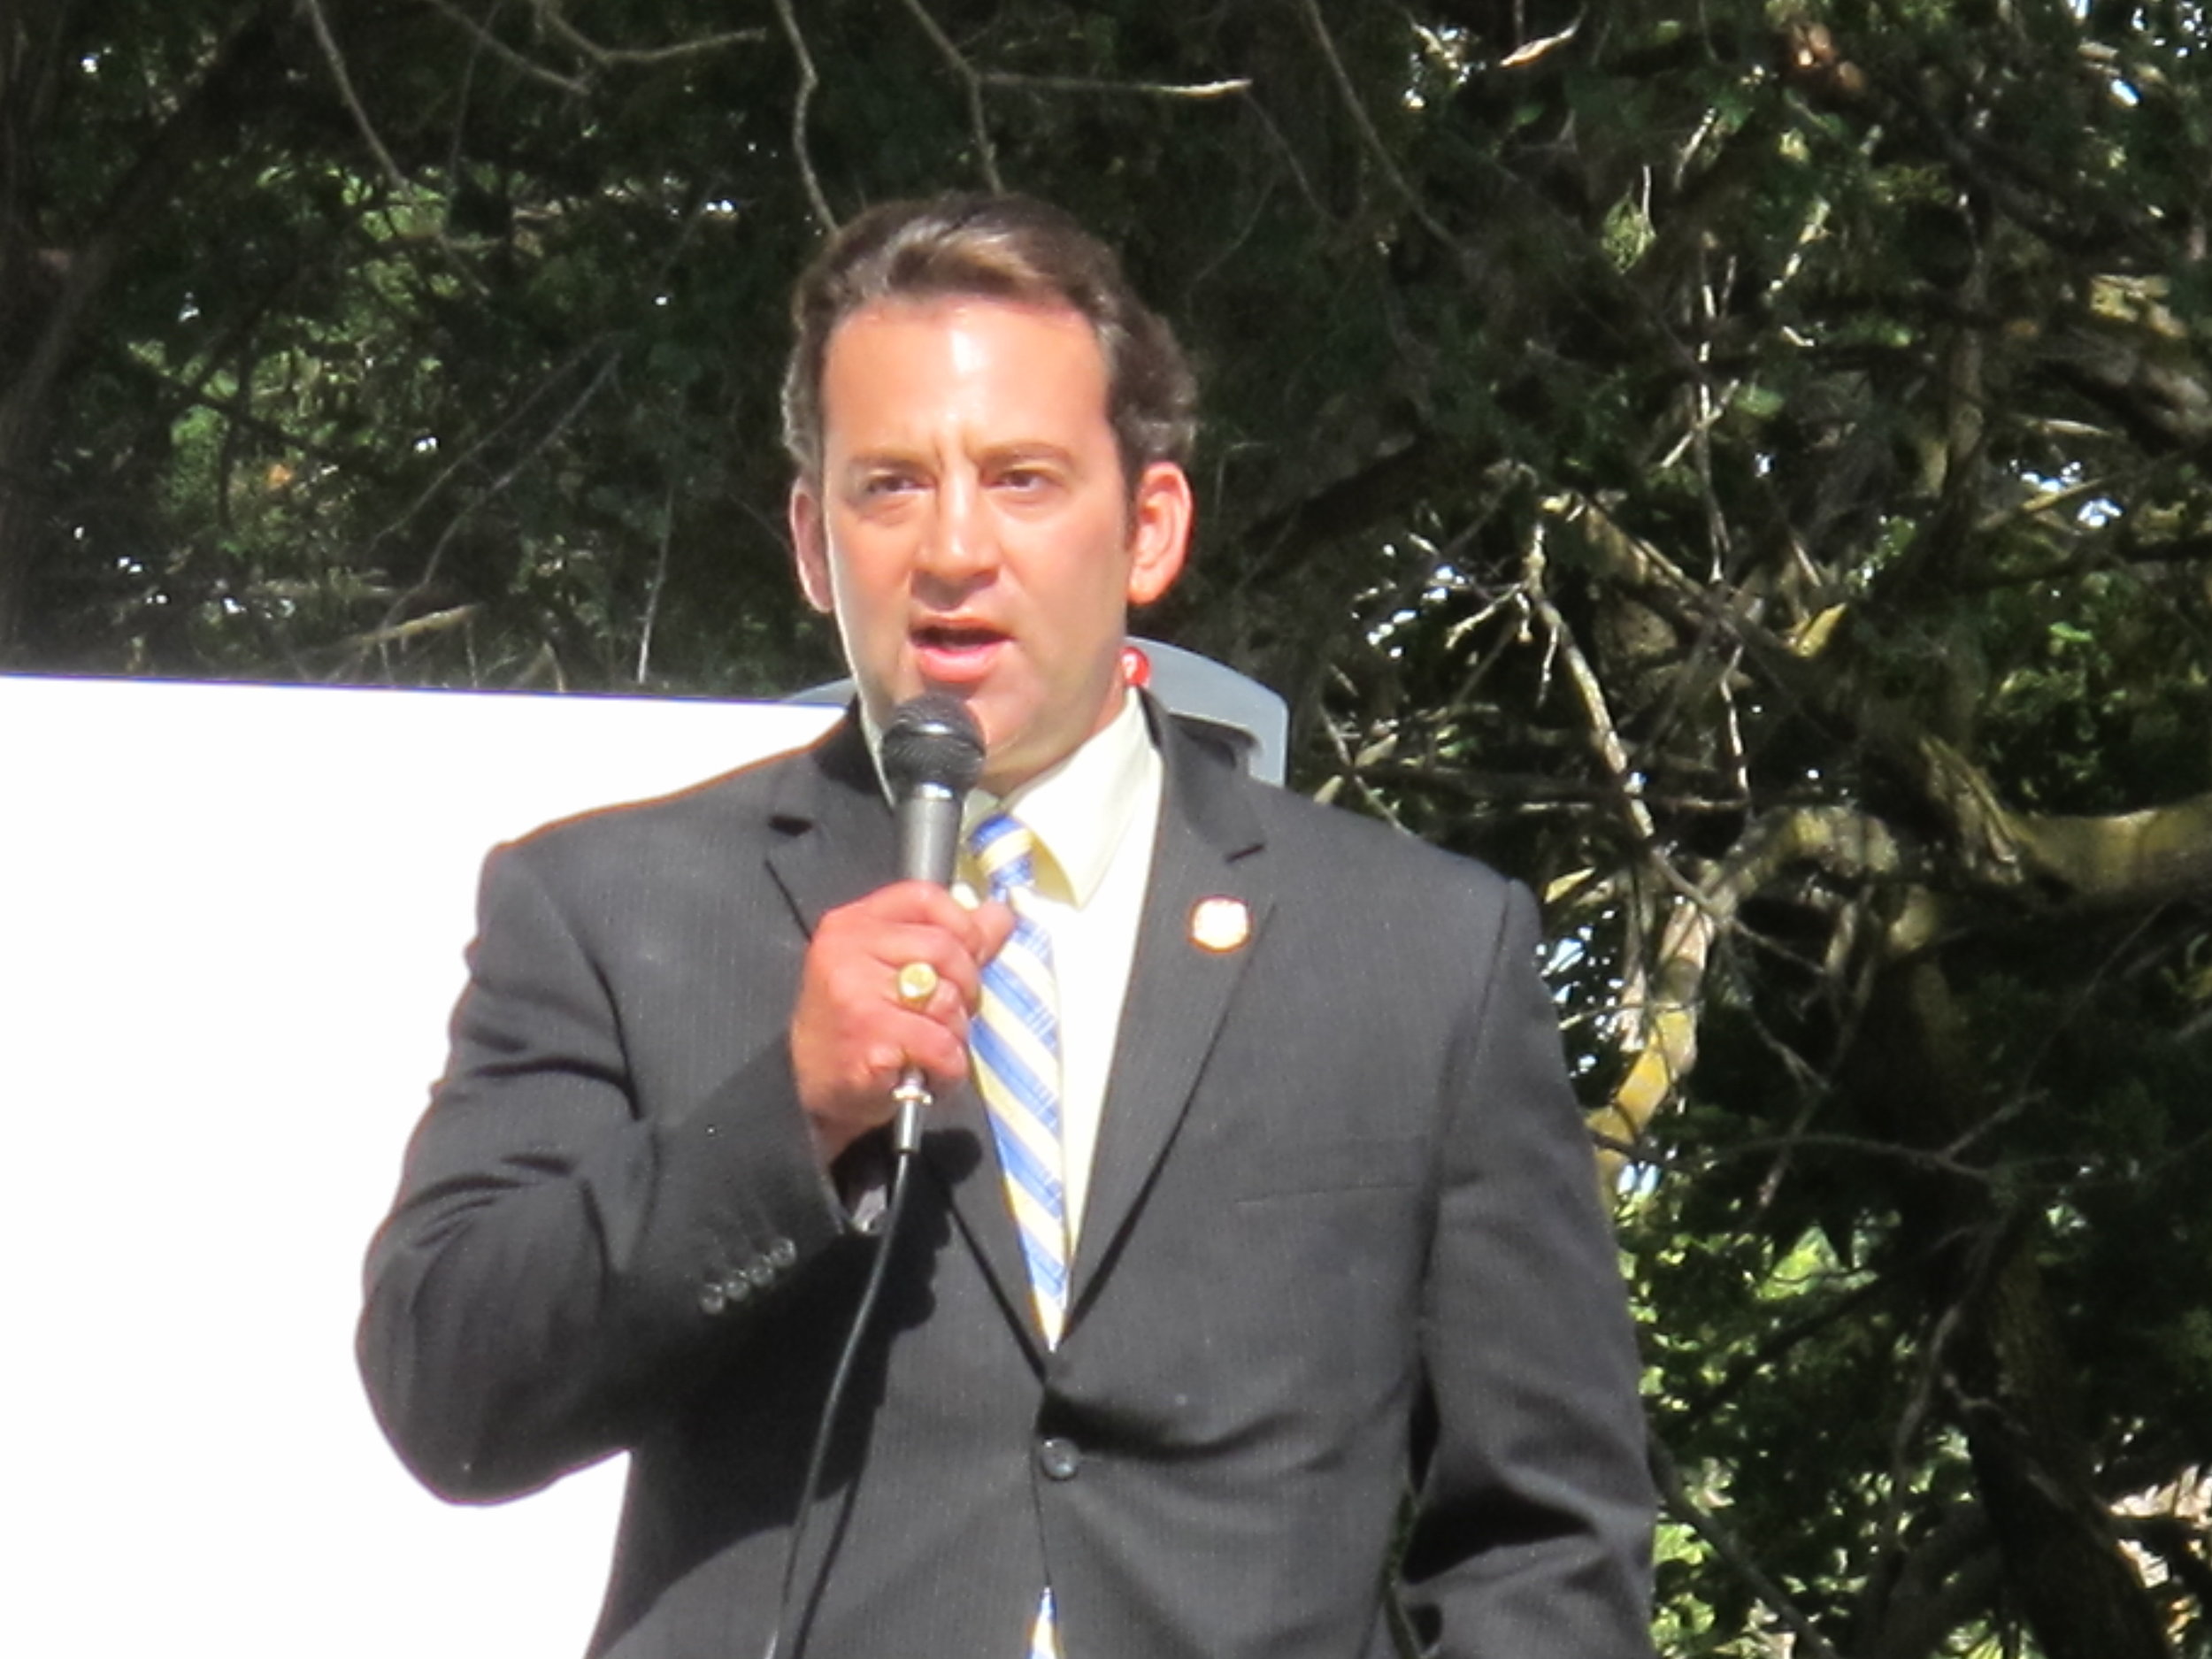 Kansas Representative Troy Waymaster